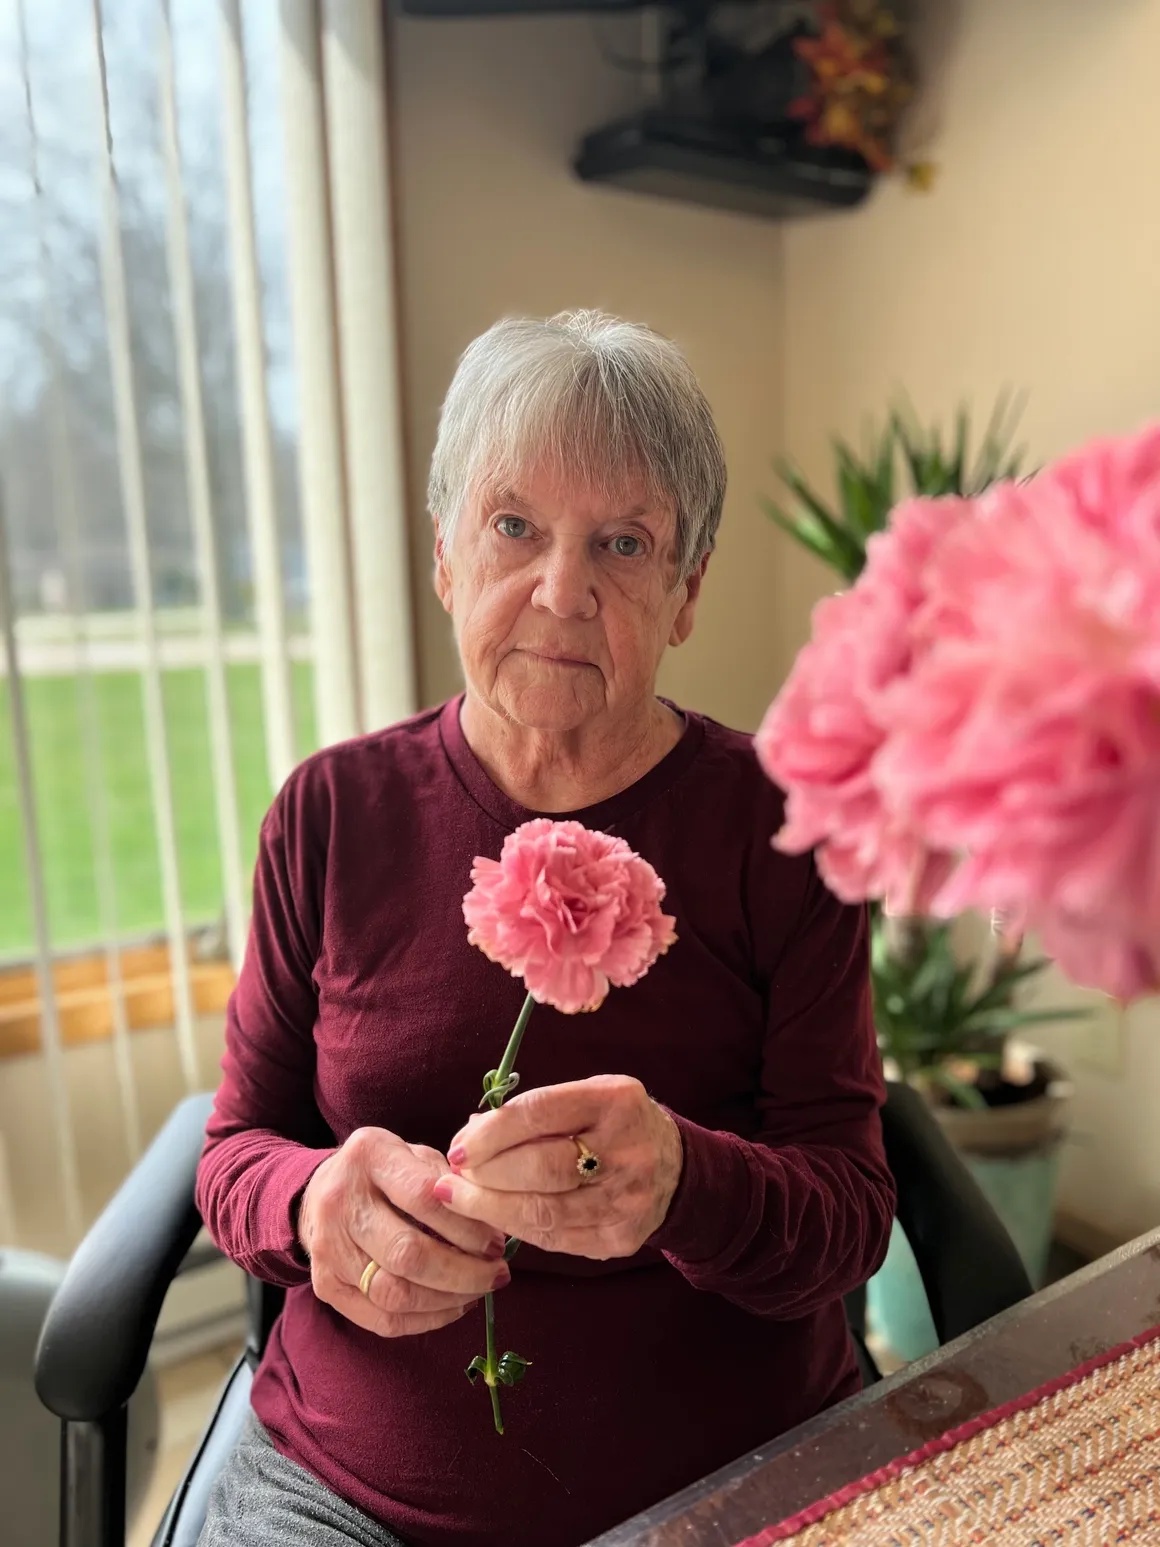 Avon Lake Senior: Embracing Independent Living in Ohio